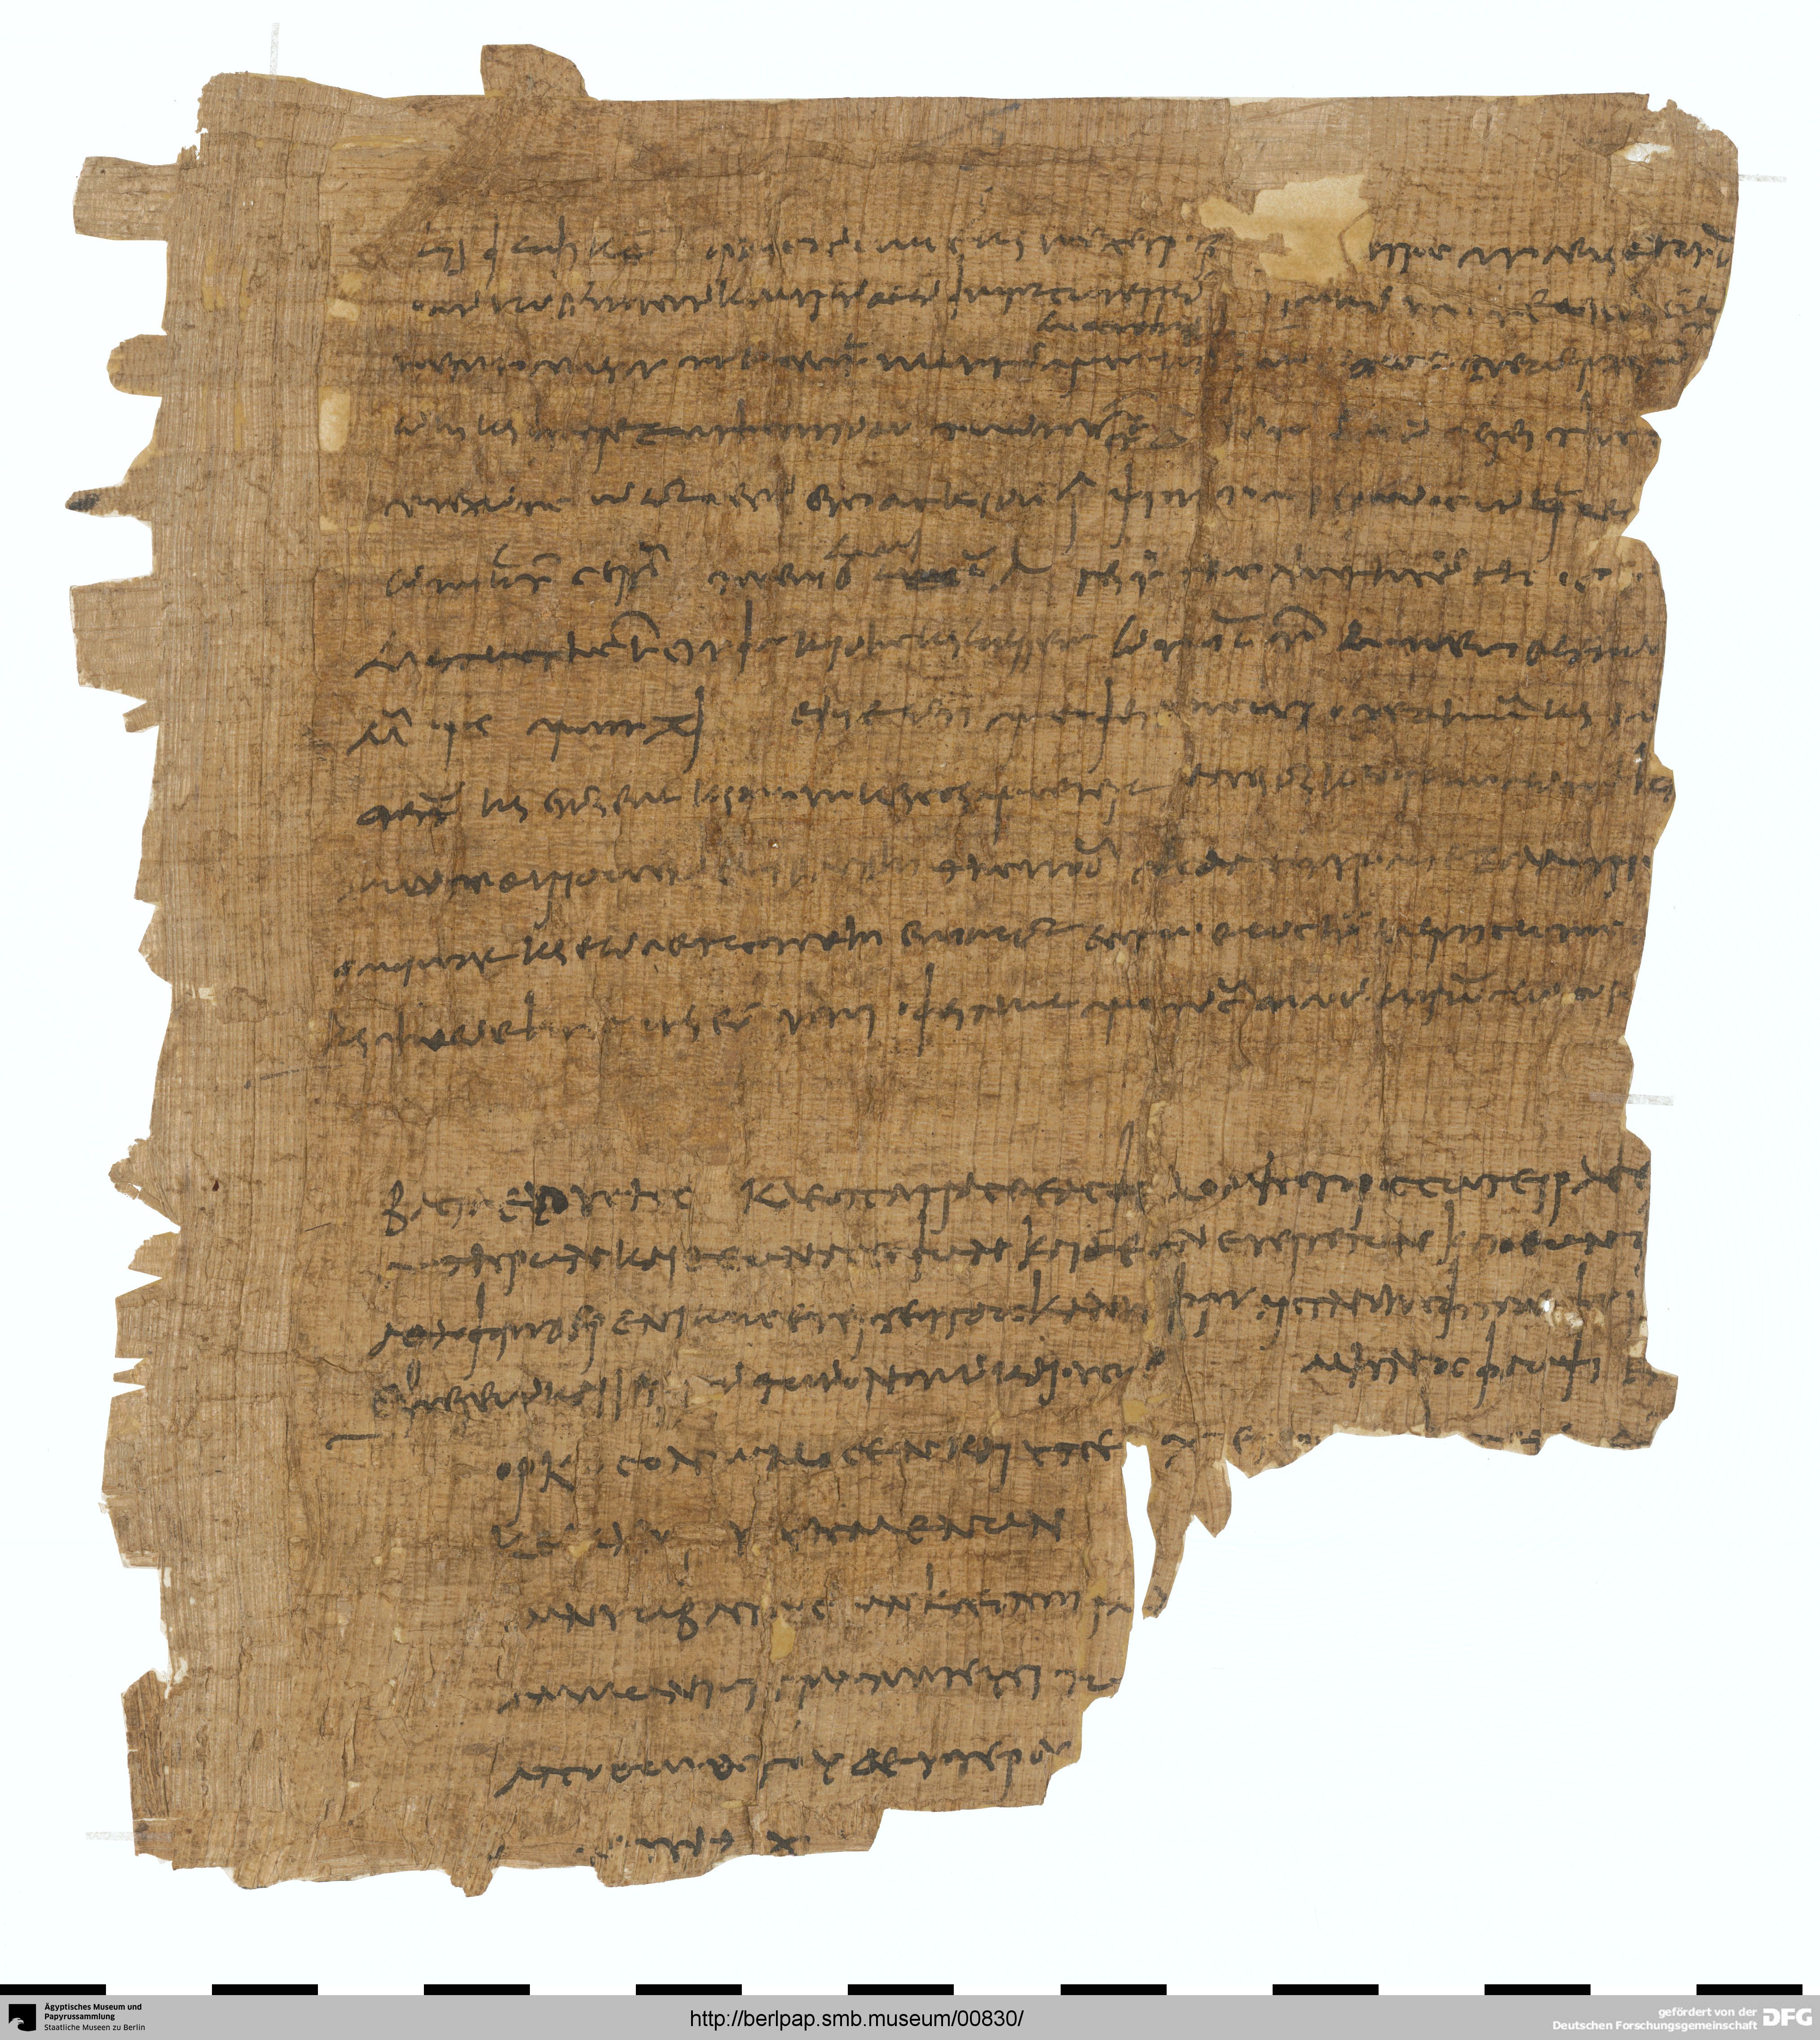 https://berlpap.smb.museum/Original/P_01383_R_001.jpg (Ägyptisches Museum und Papyrussammlung, Staatliche Museen zu Berlin CC BY-NC-SA)